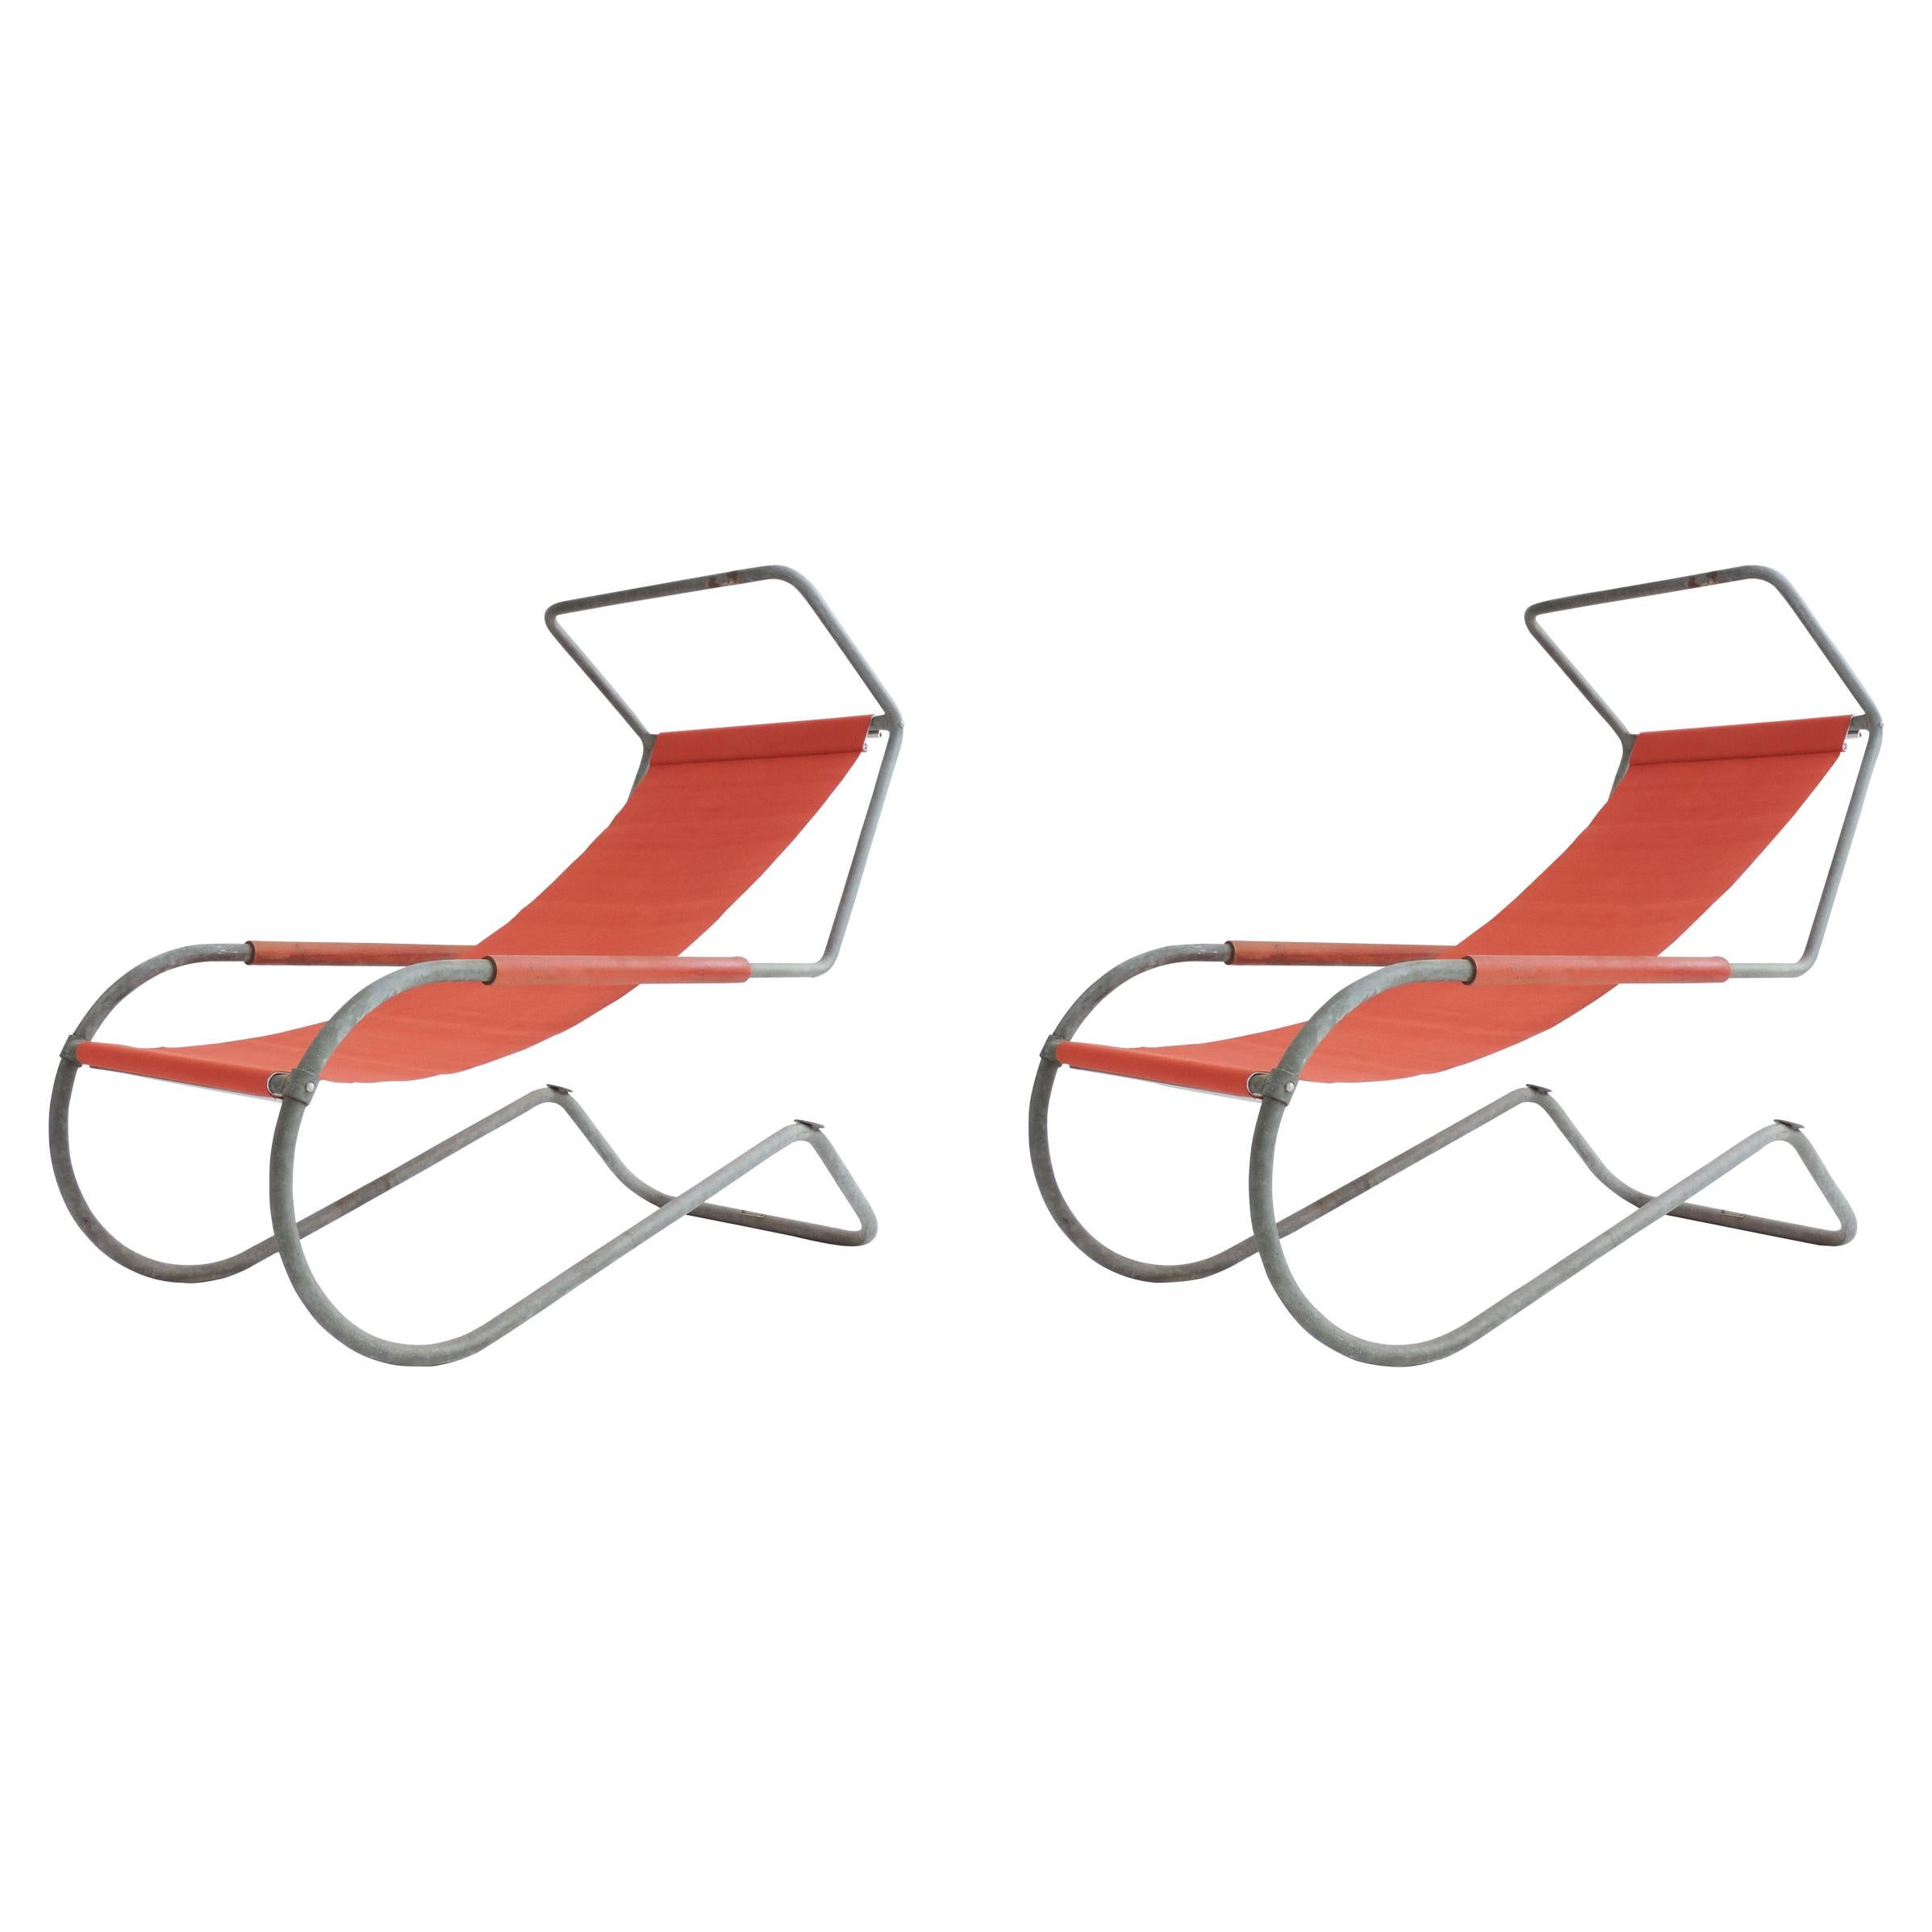 Pair of 'Lido' Lounge Chairs by Battista Giudici, Locarno, Switzerland, 1936